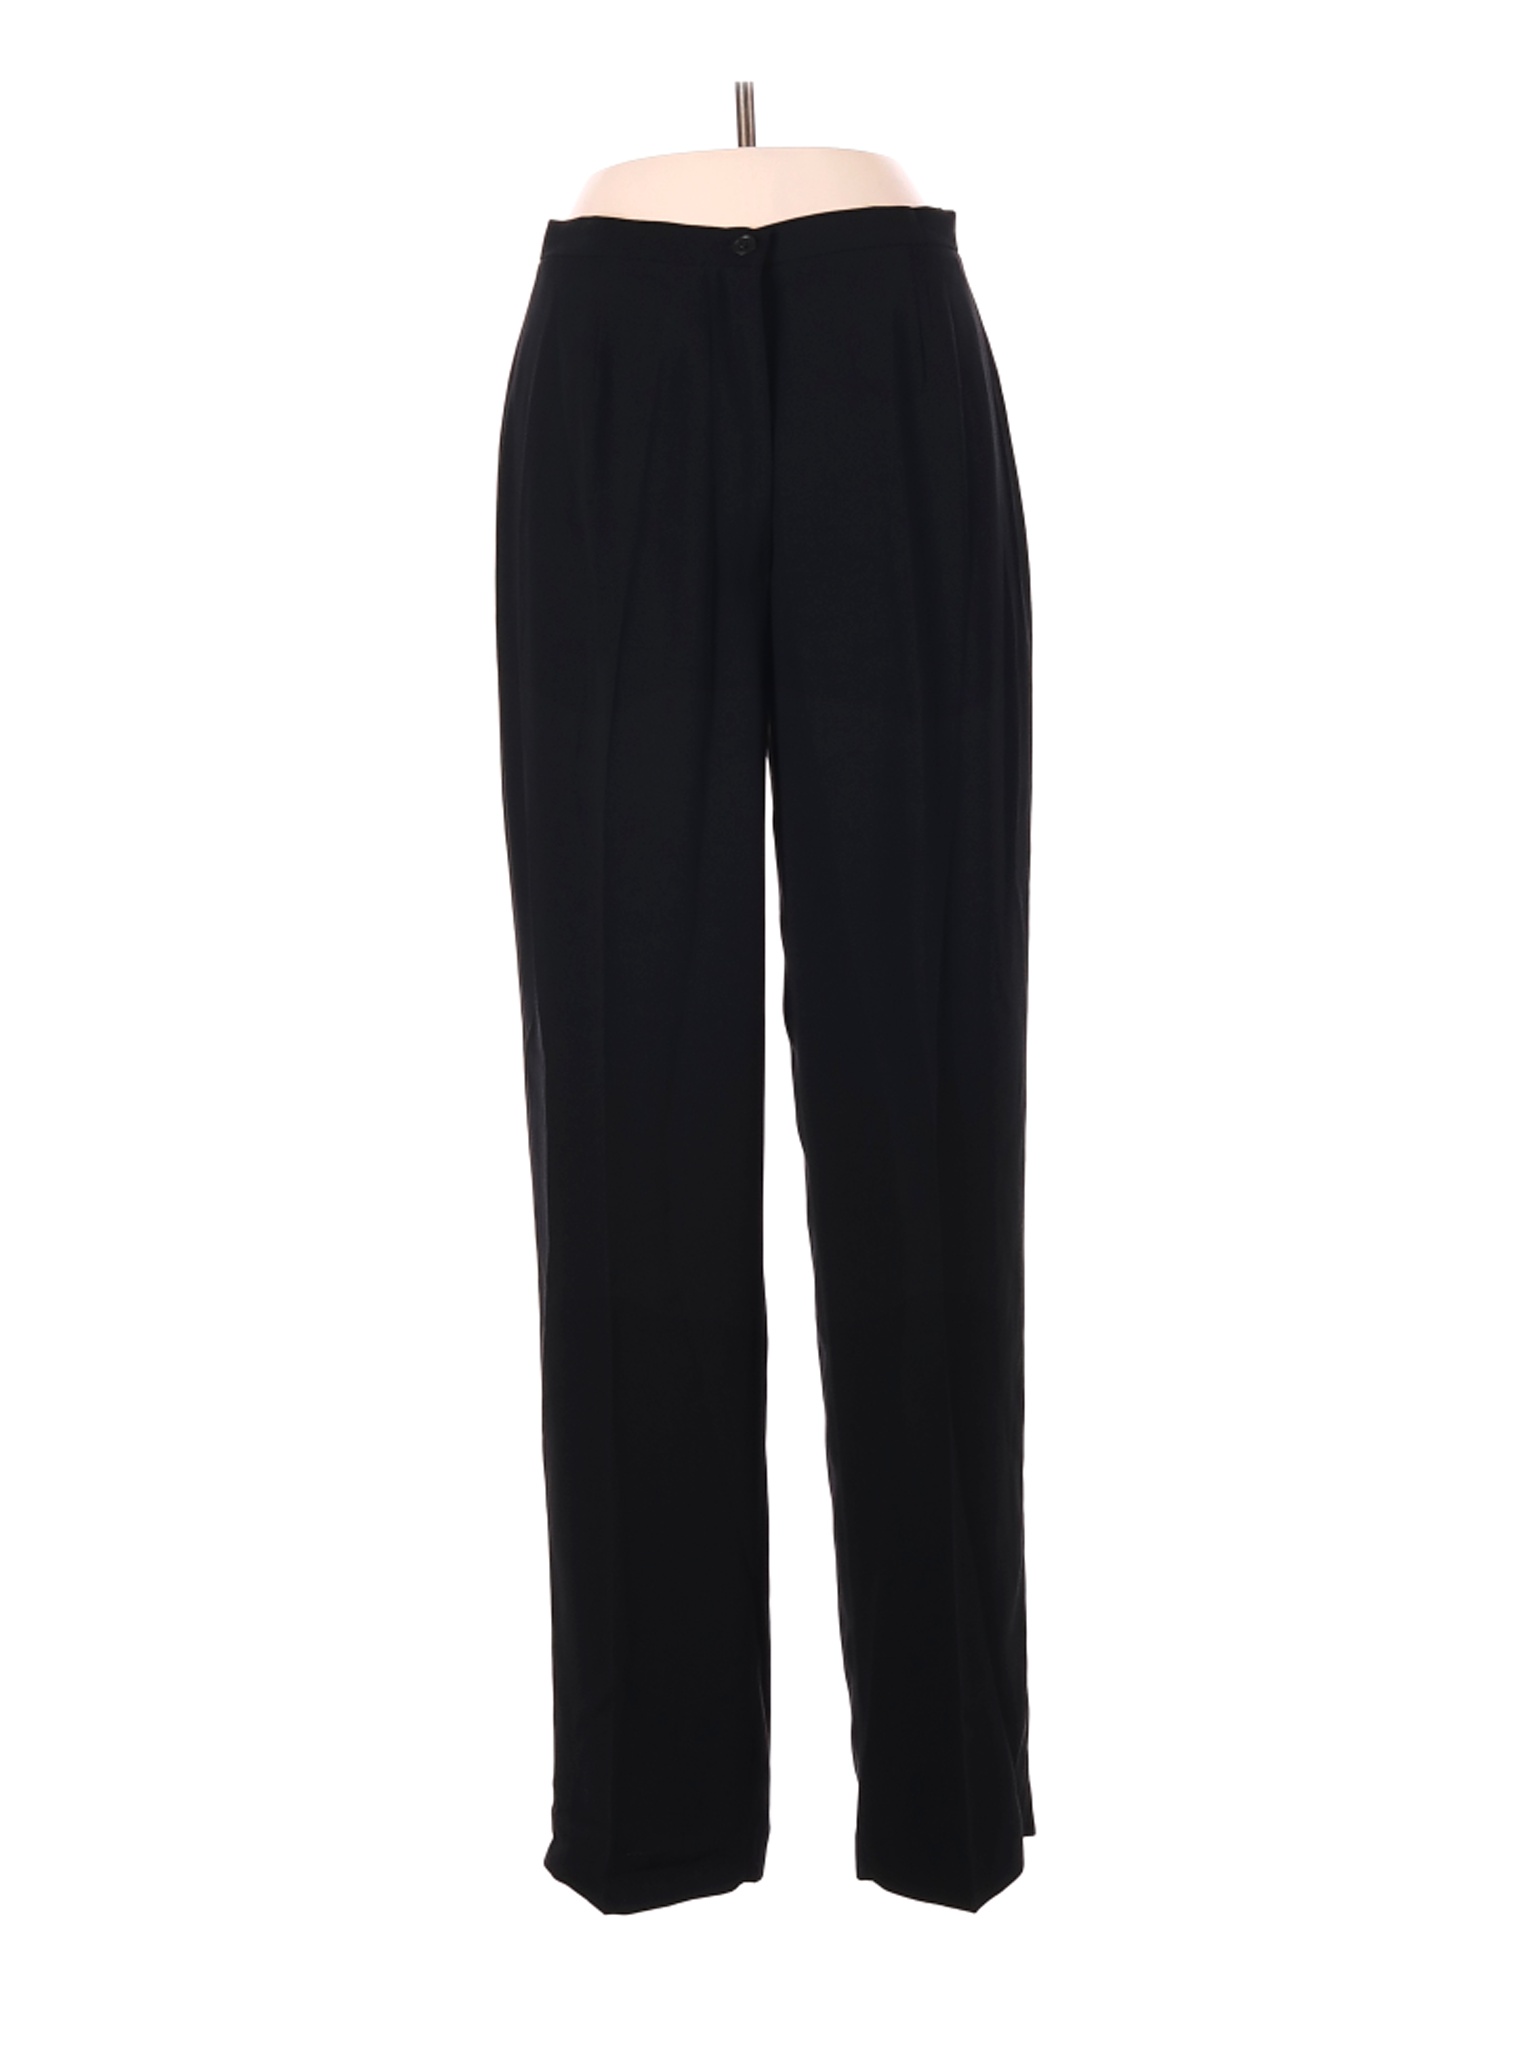 George Women Black Dress Pants 9 | eBay